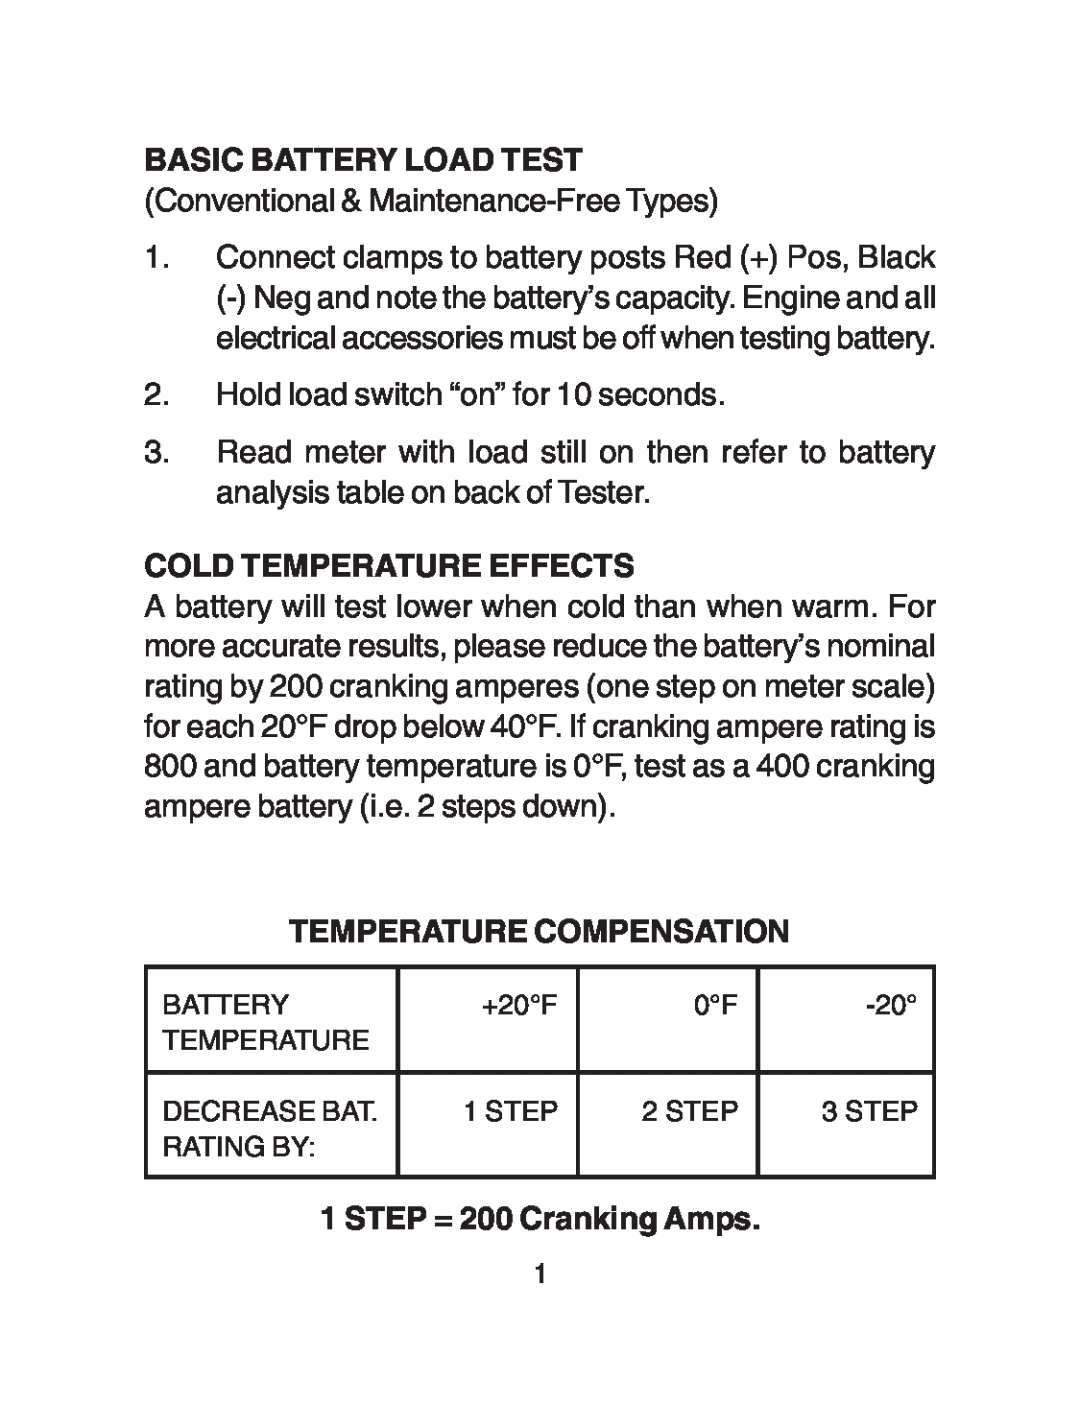 Schumacher BT-100 Basic Battery Load Test, Cold Temperature Effects, Temperature Compensation, STEP = 200 Cranking Amps 